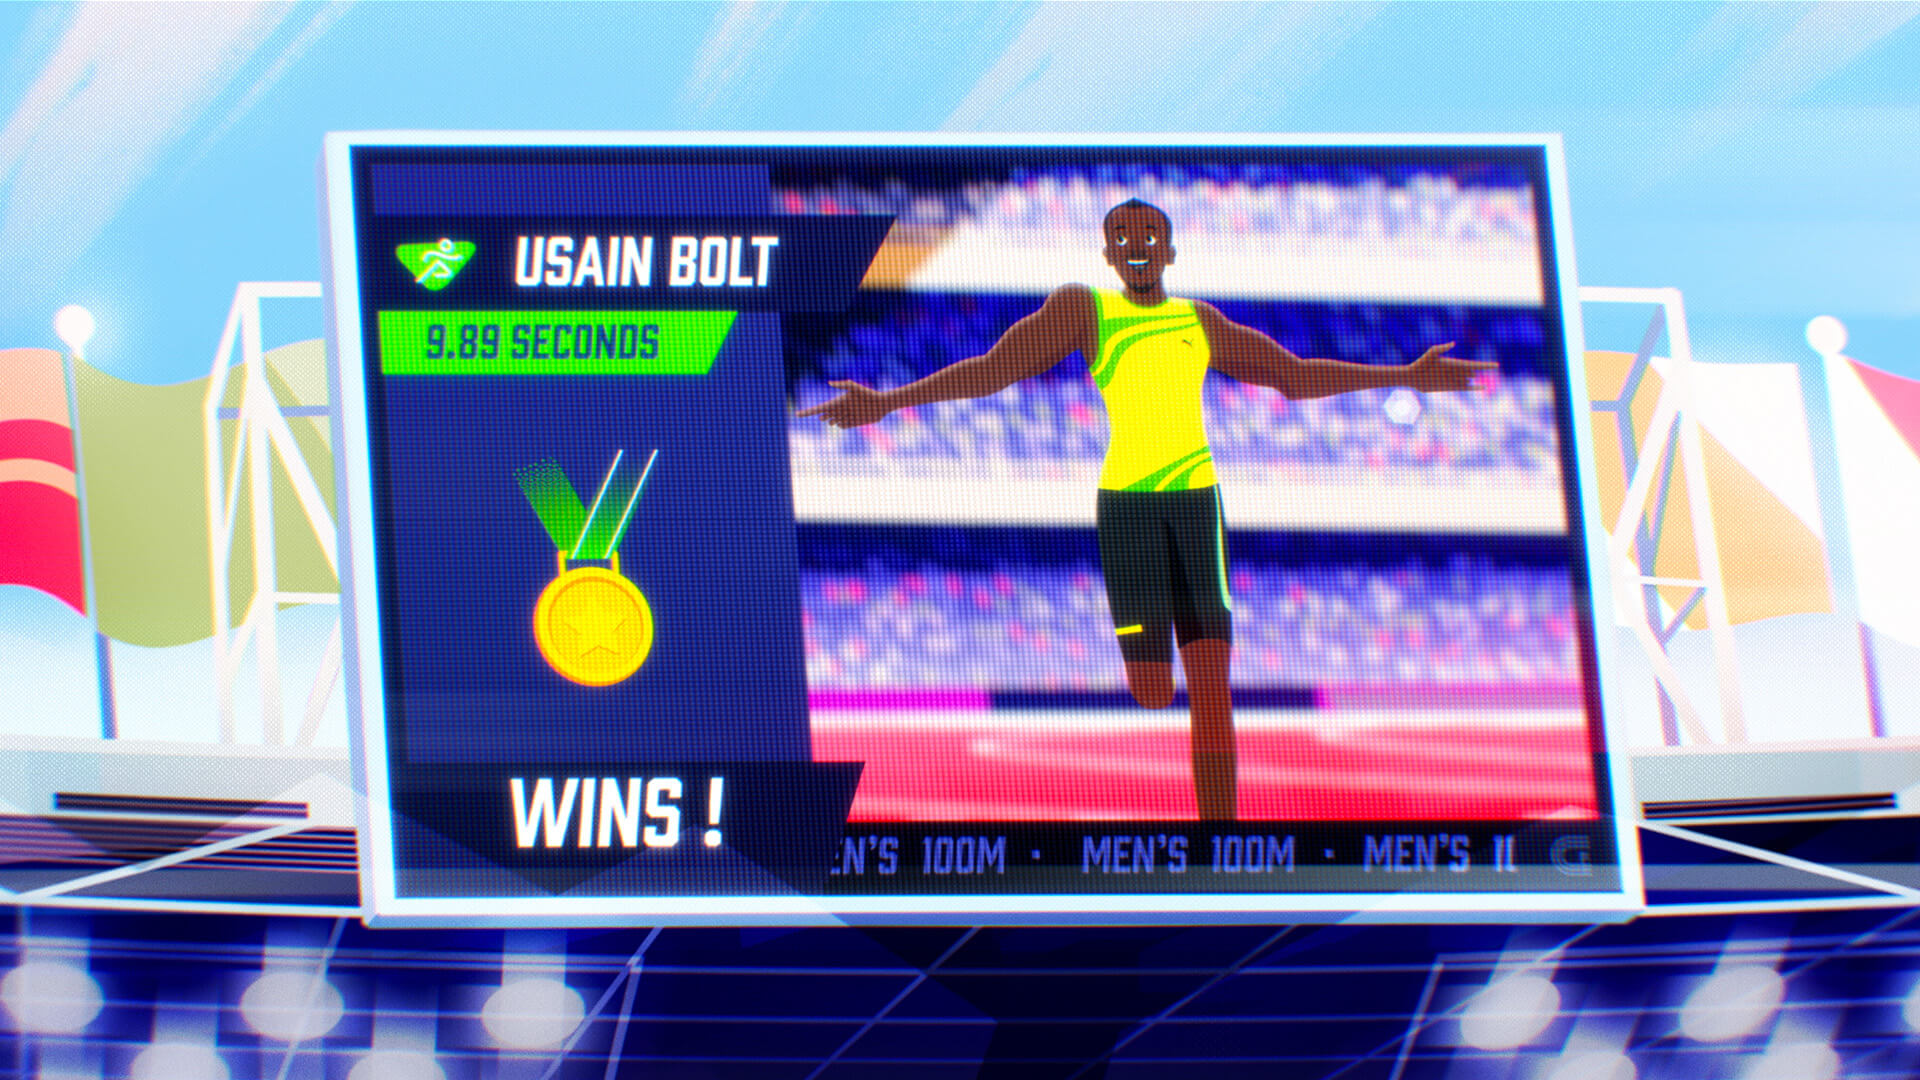 Usain Bolt celebrating the victory